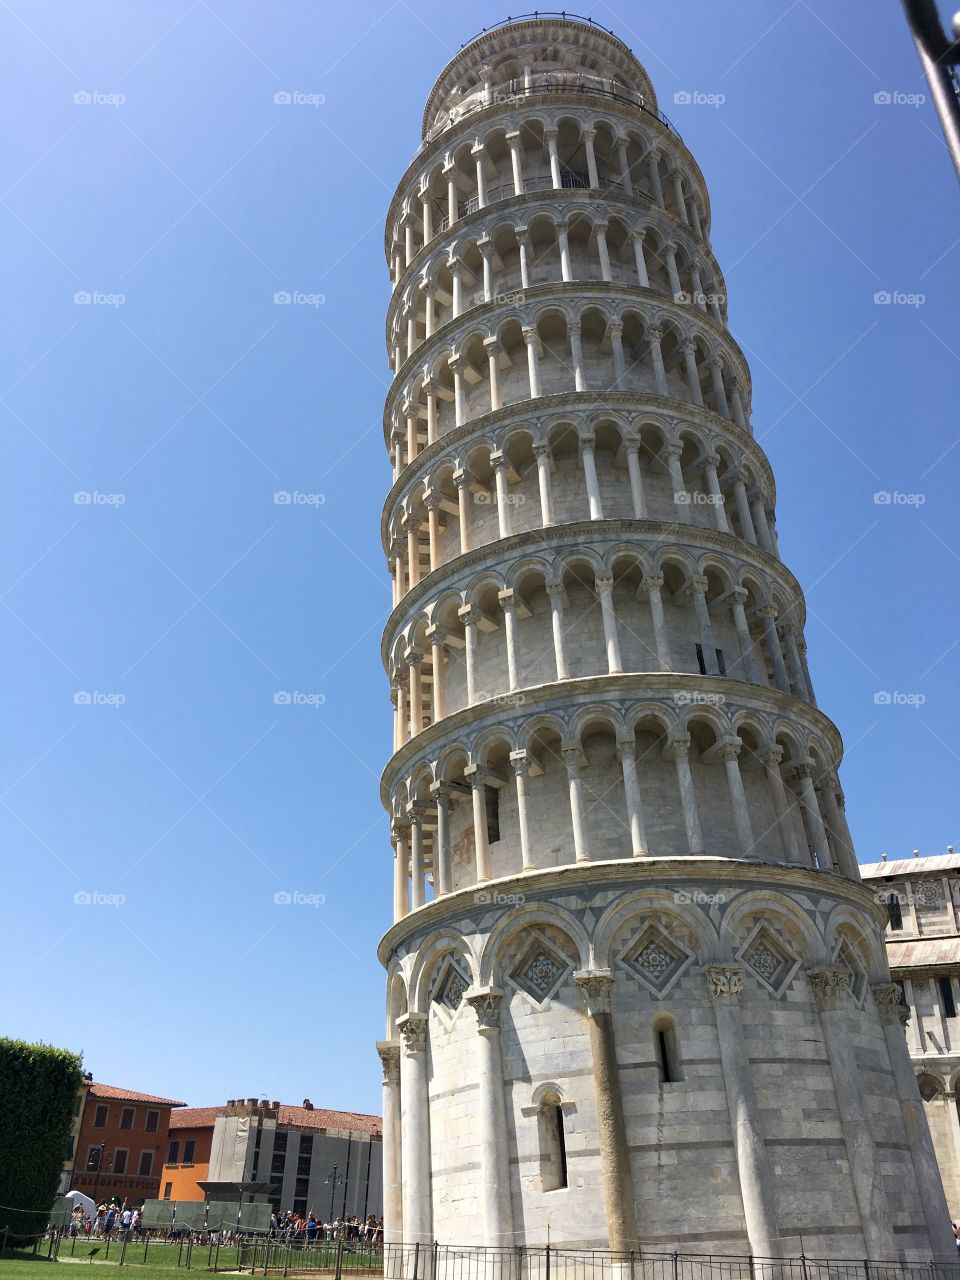 Pisa tower, Italy